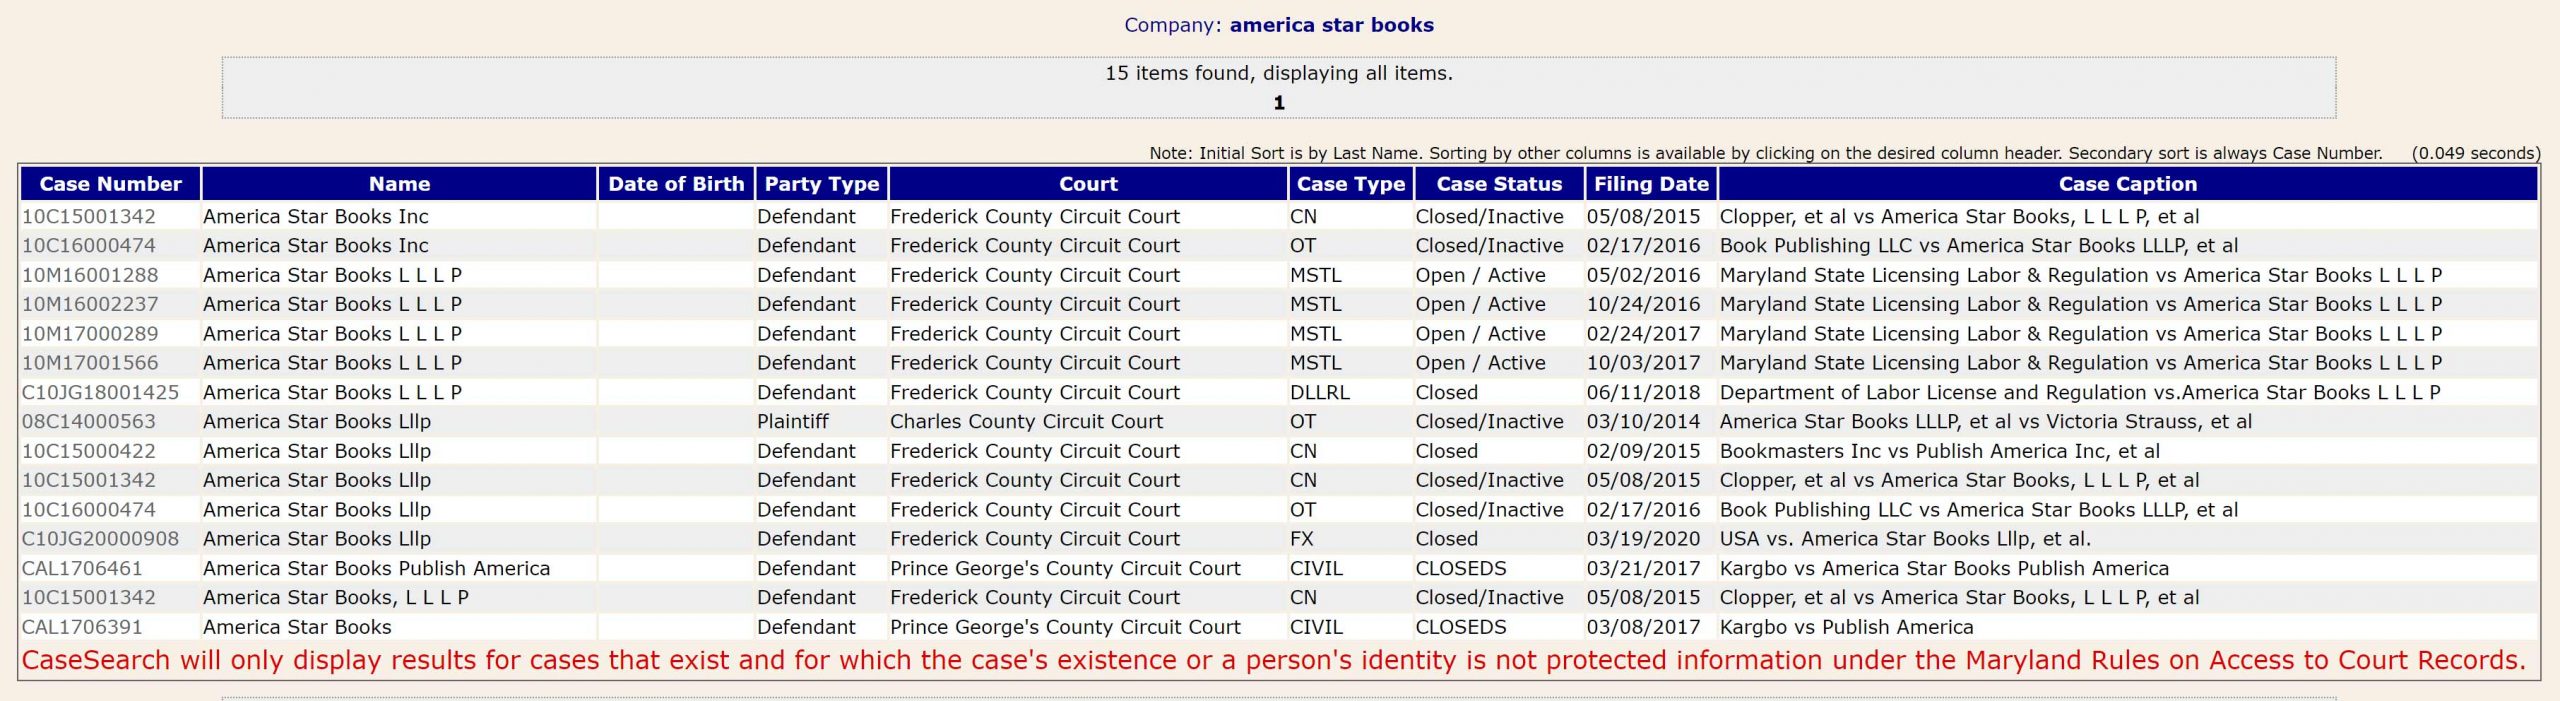 america-star-books-lawsuits